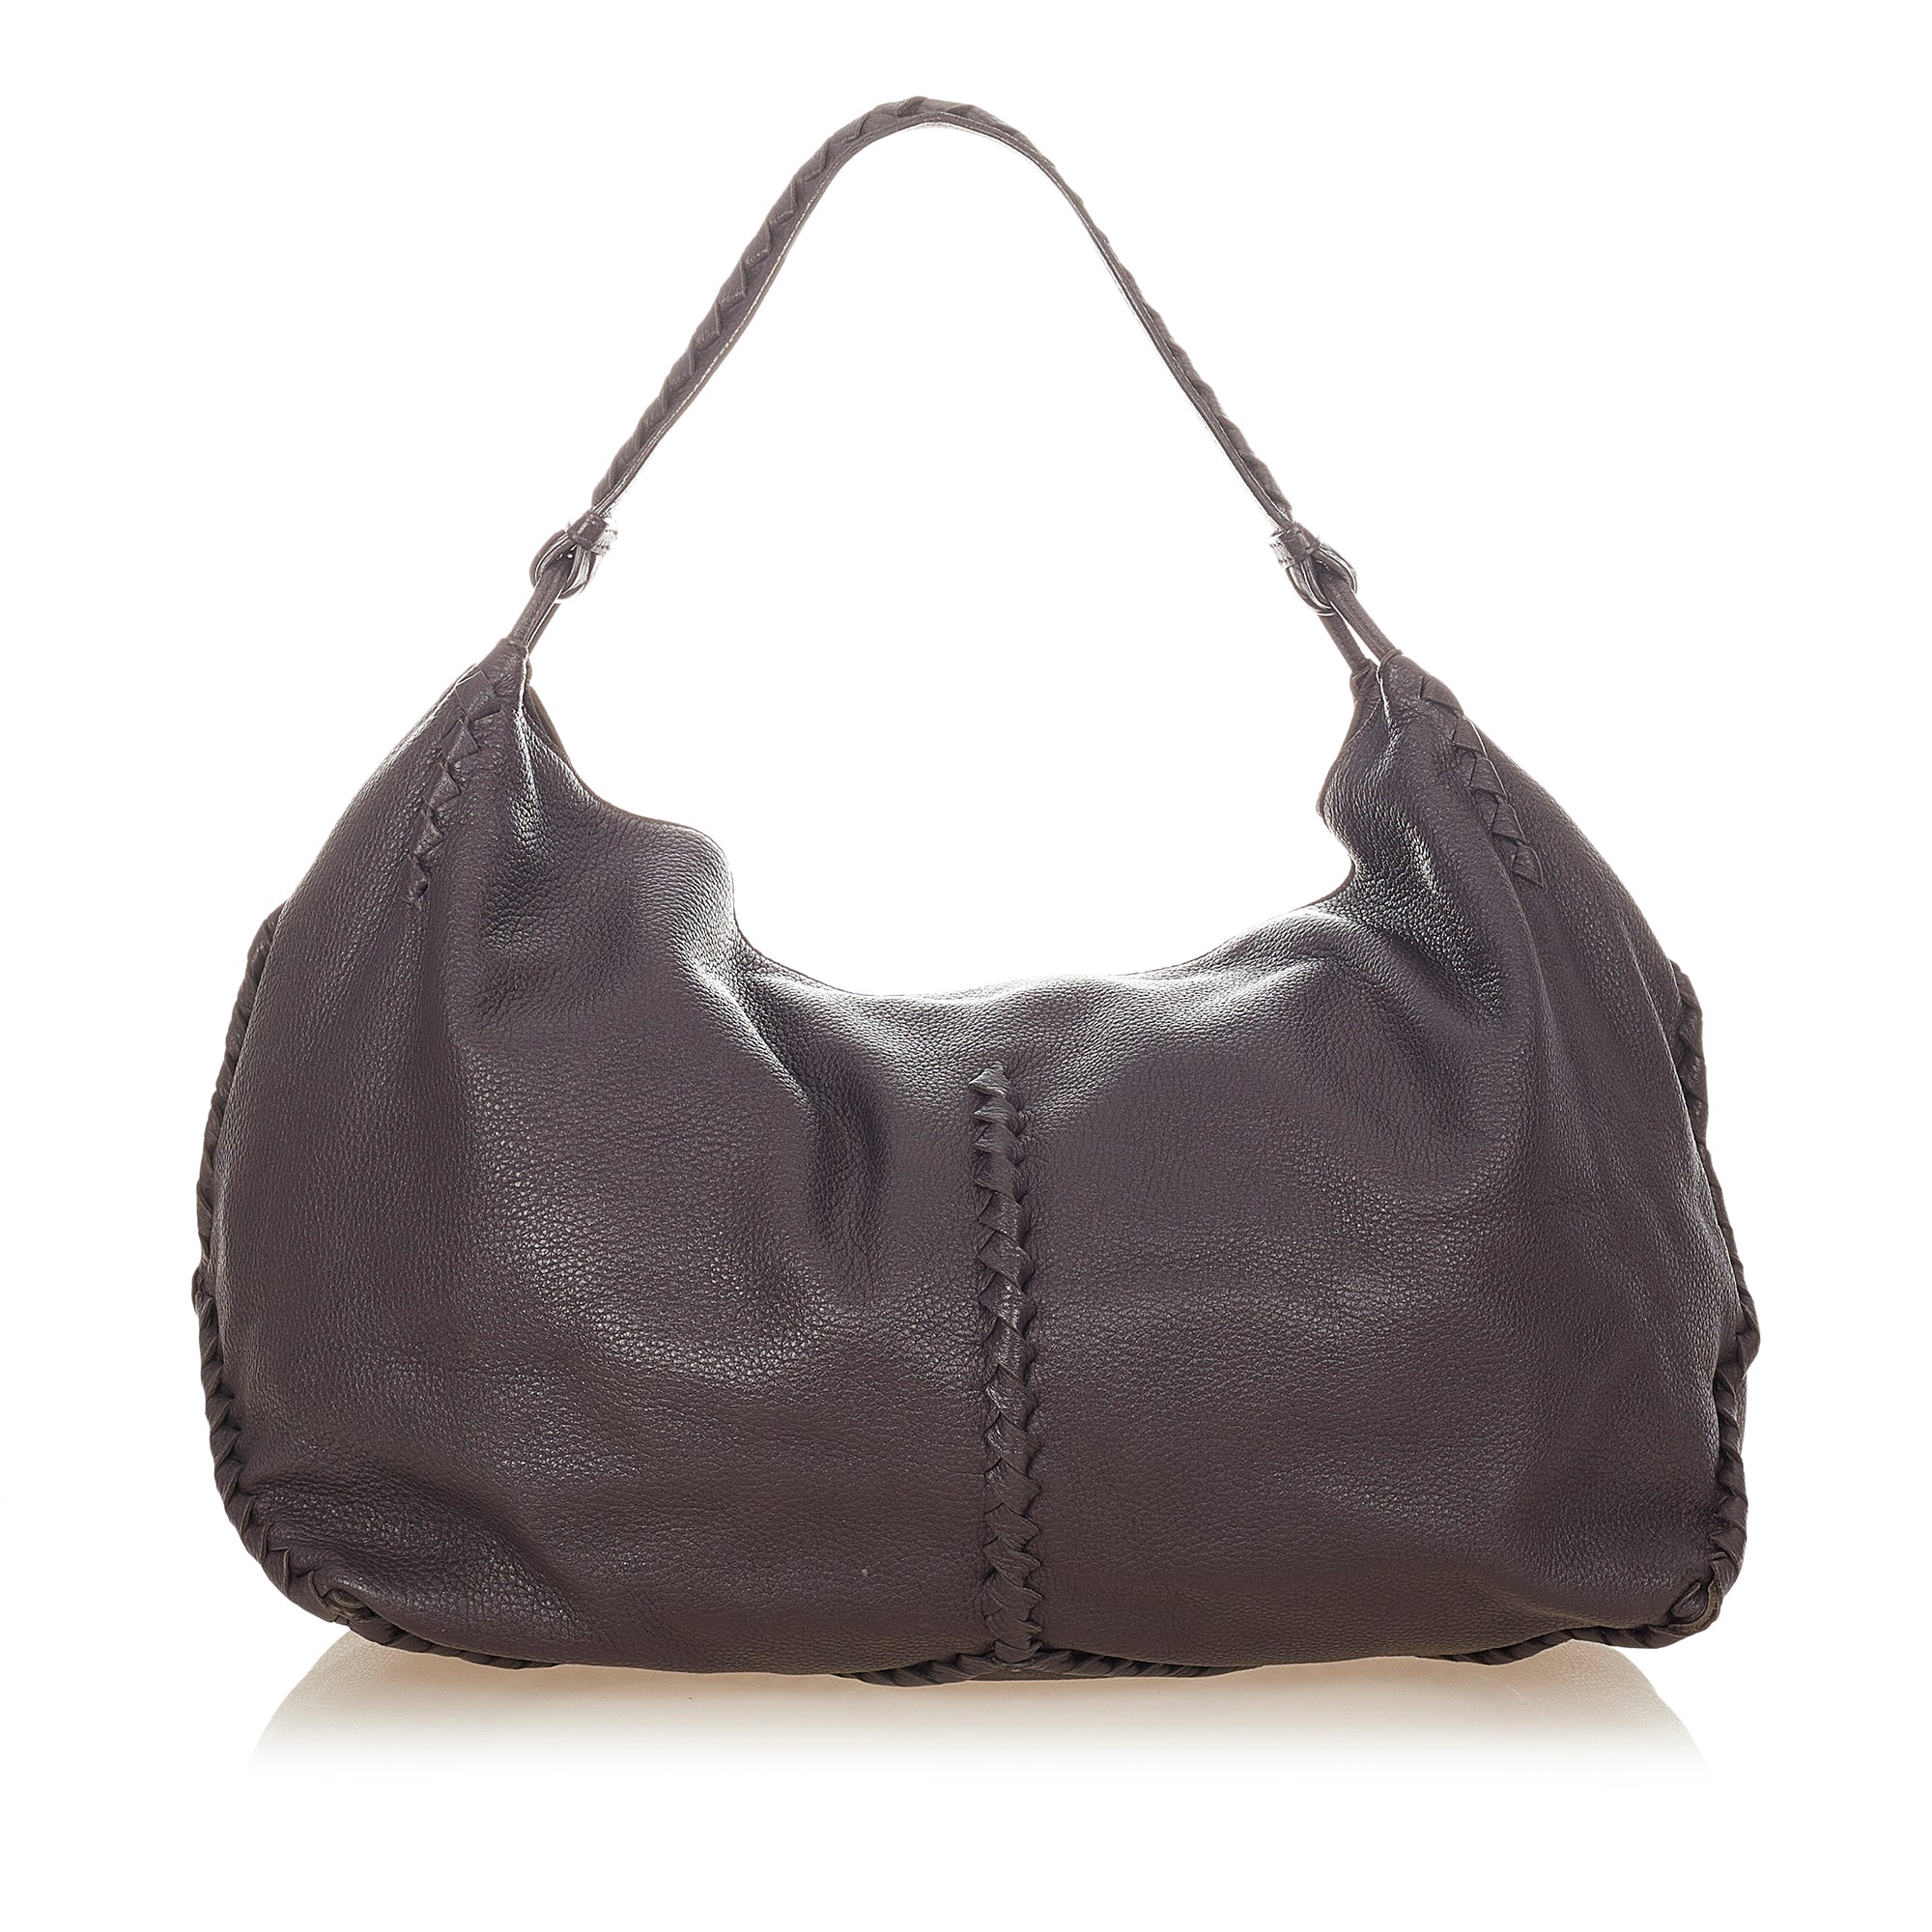 Bottega Veneta Intrecciato Woven Leather Trim Satchel Bag